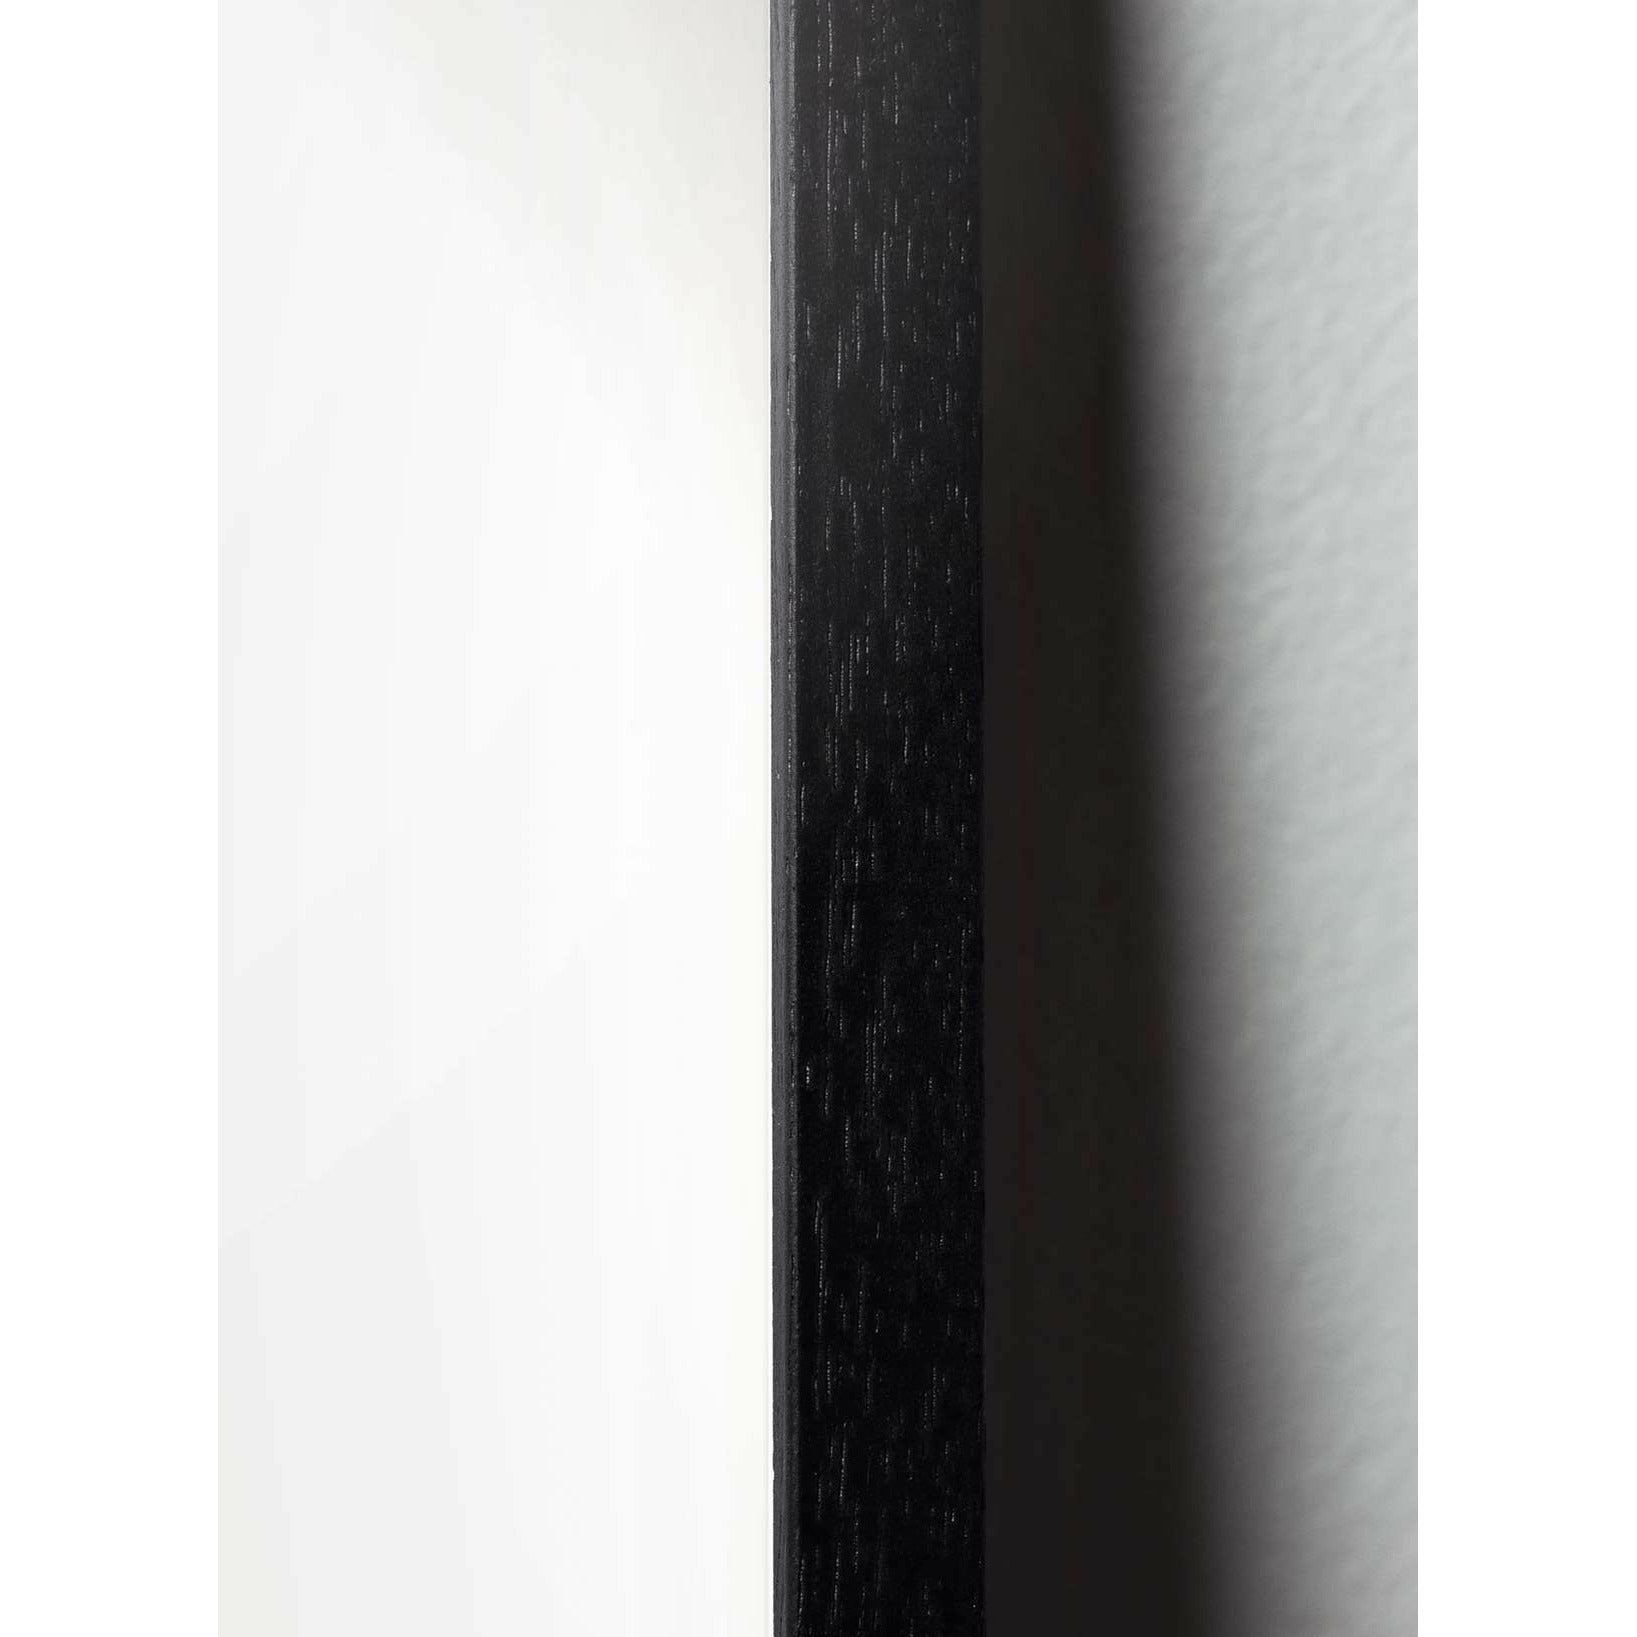 Póster de icono de diseño de creación, marco en madera lacada negra A5, color